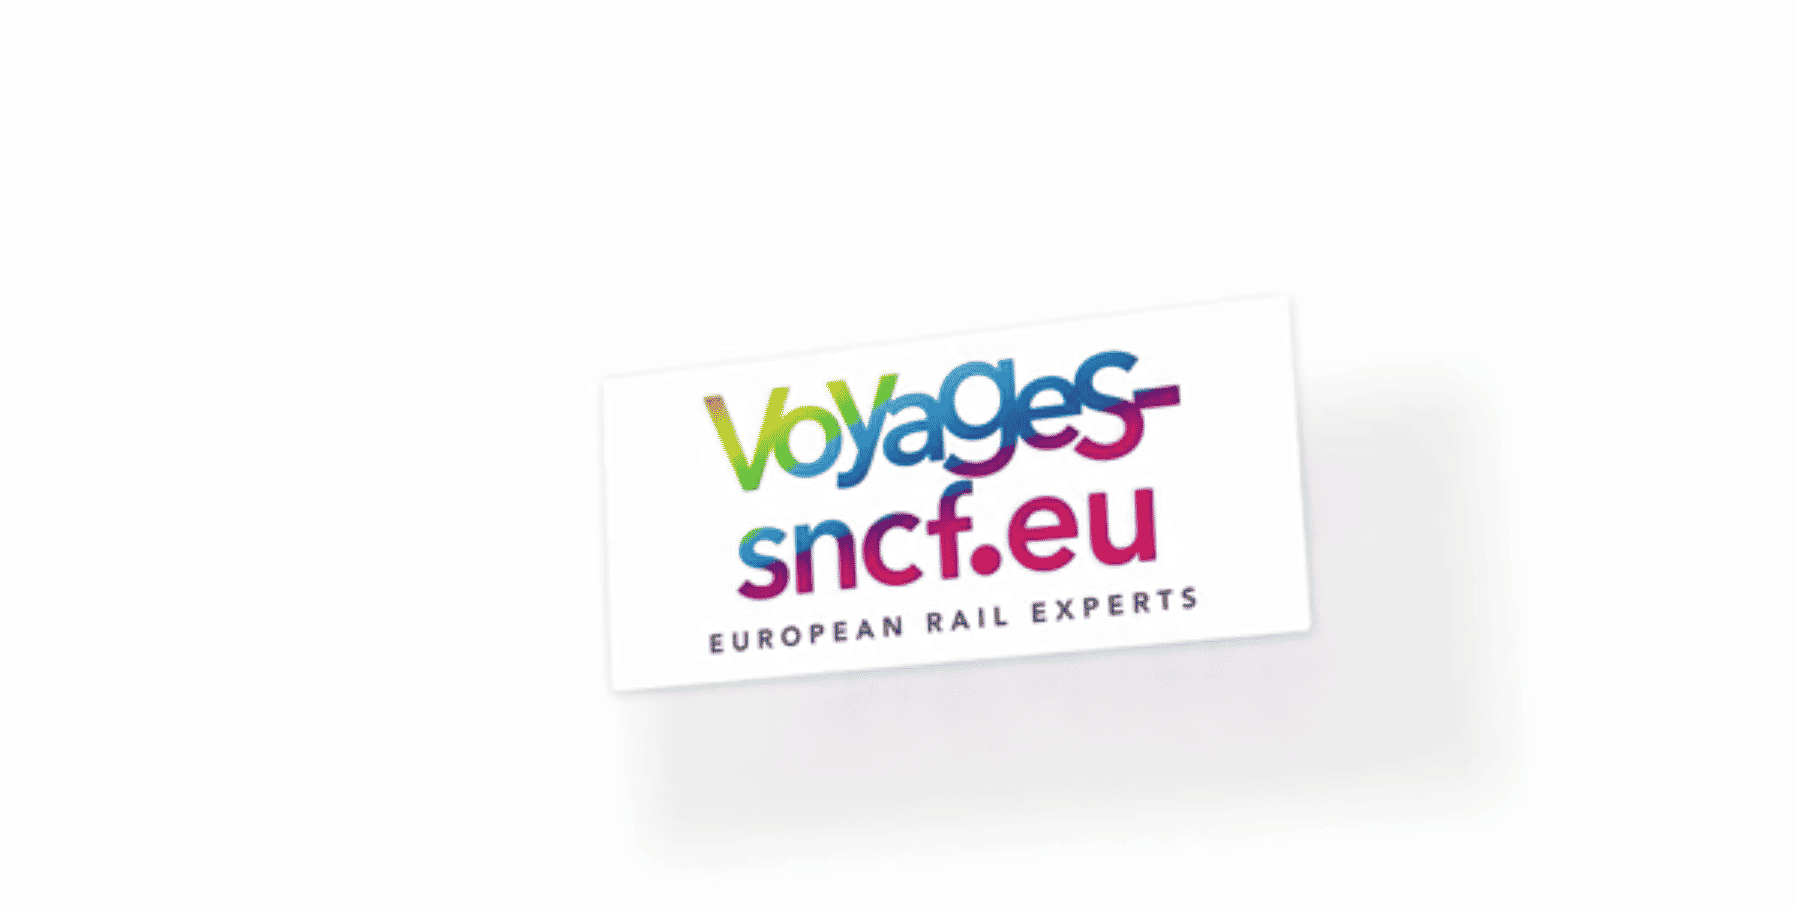 voyages-sncf.eu